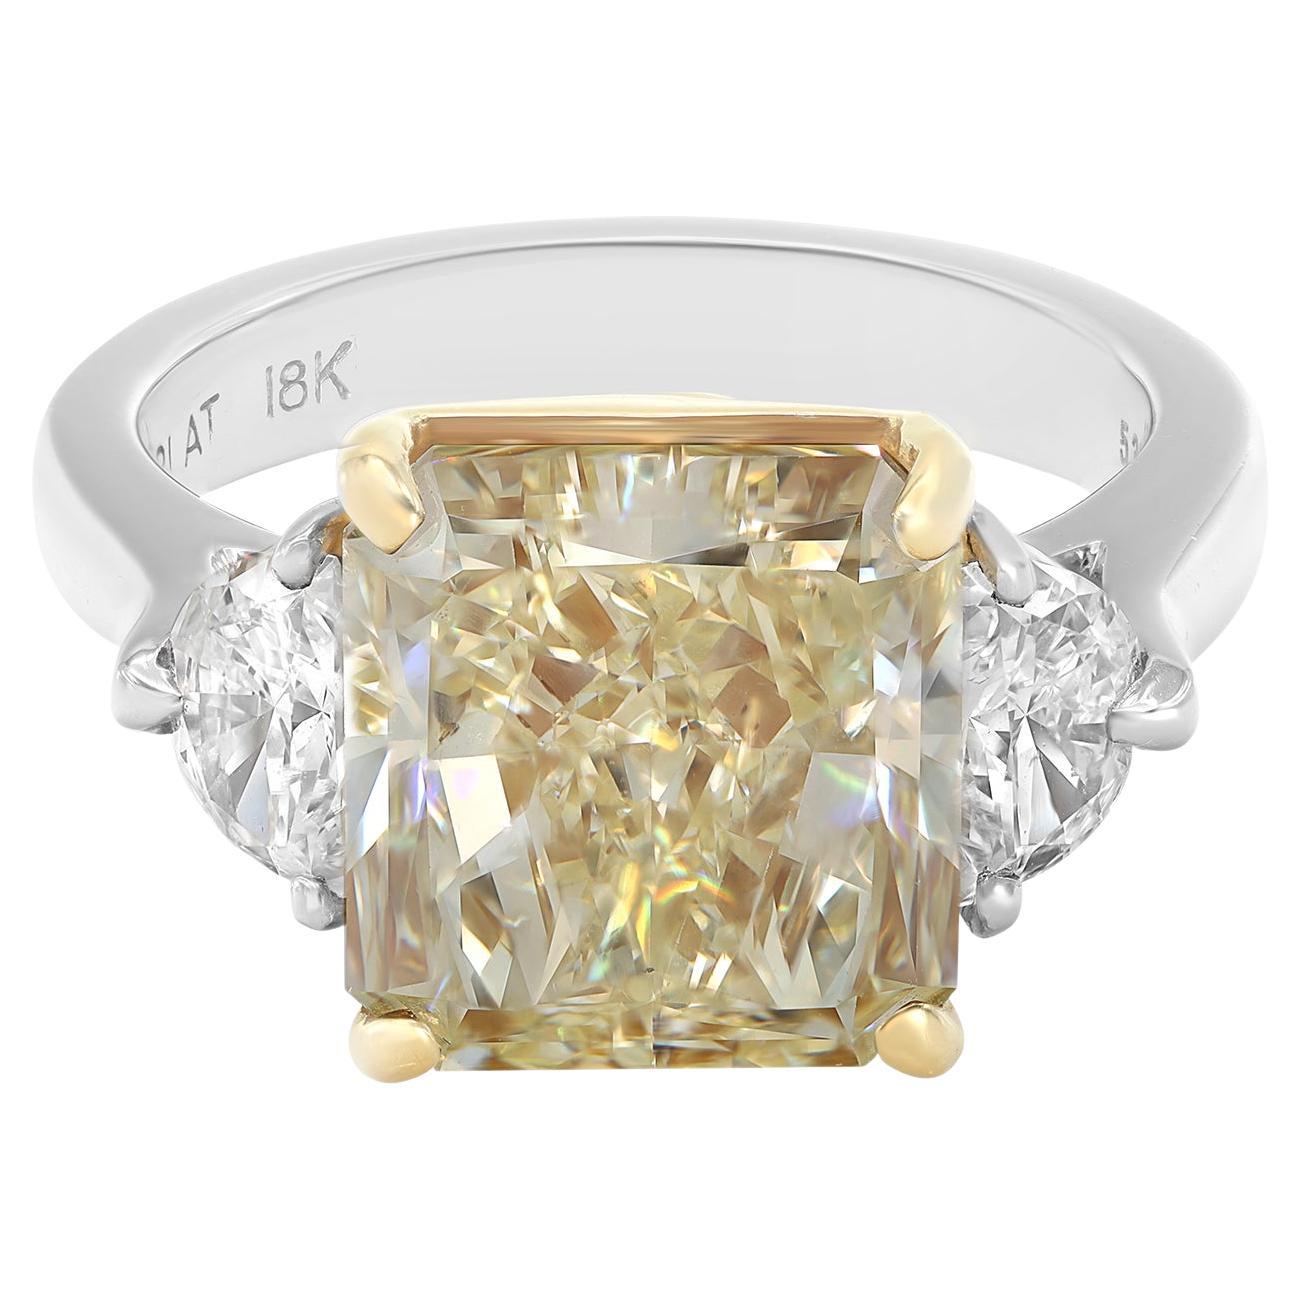 Princess Cut Light Yellow Diamond Ring Platinum 18K Yellow Gold 5.36cts